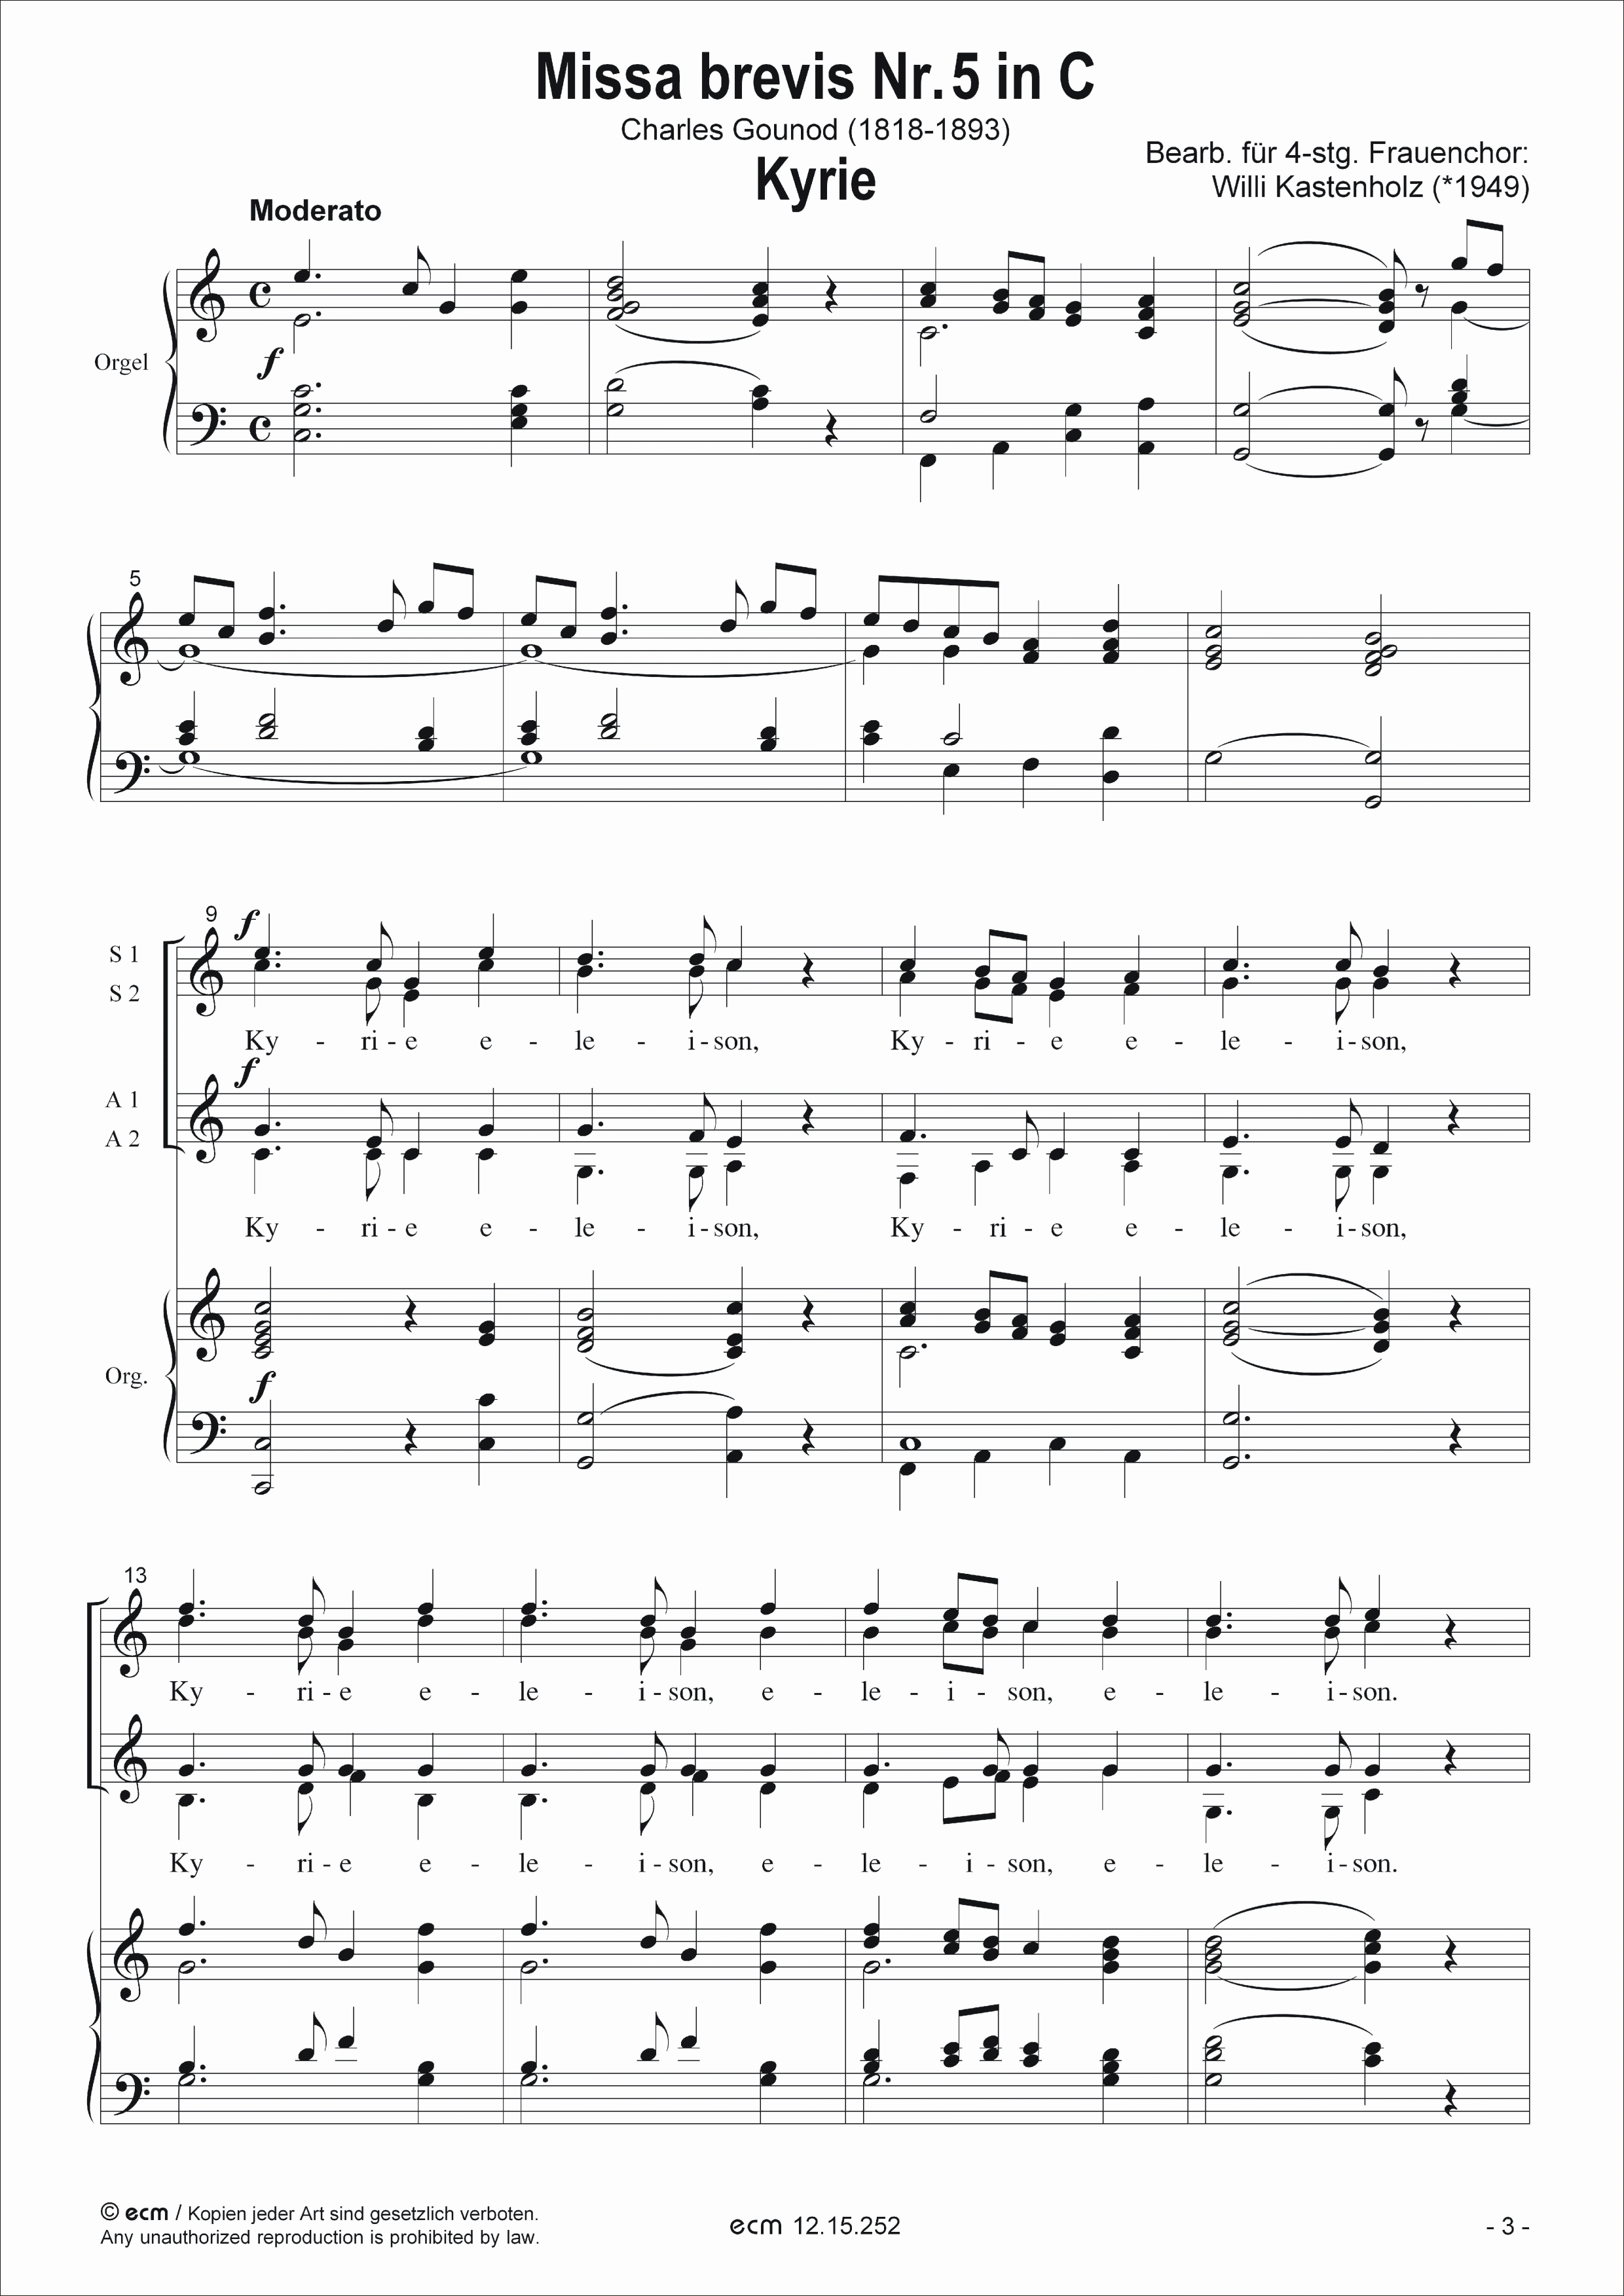 Missa brevis Nr. 5 in C (Full score)